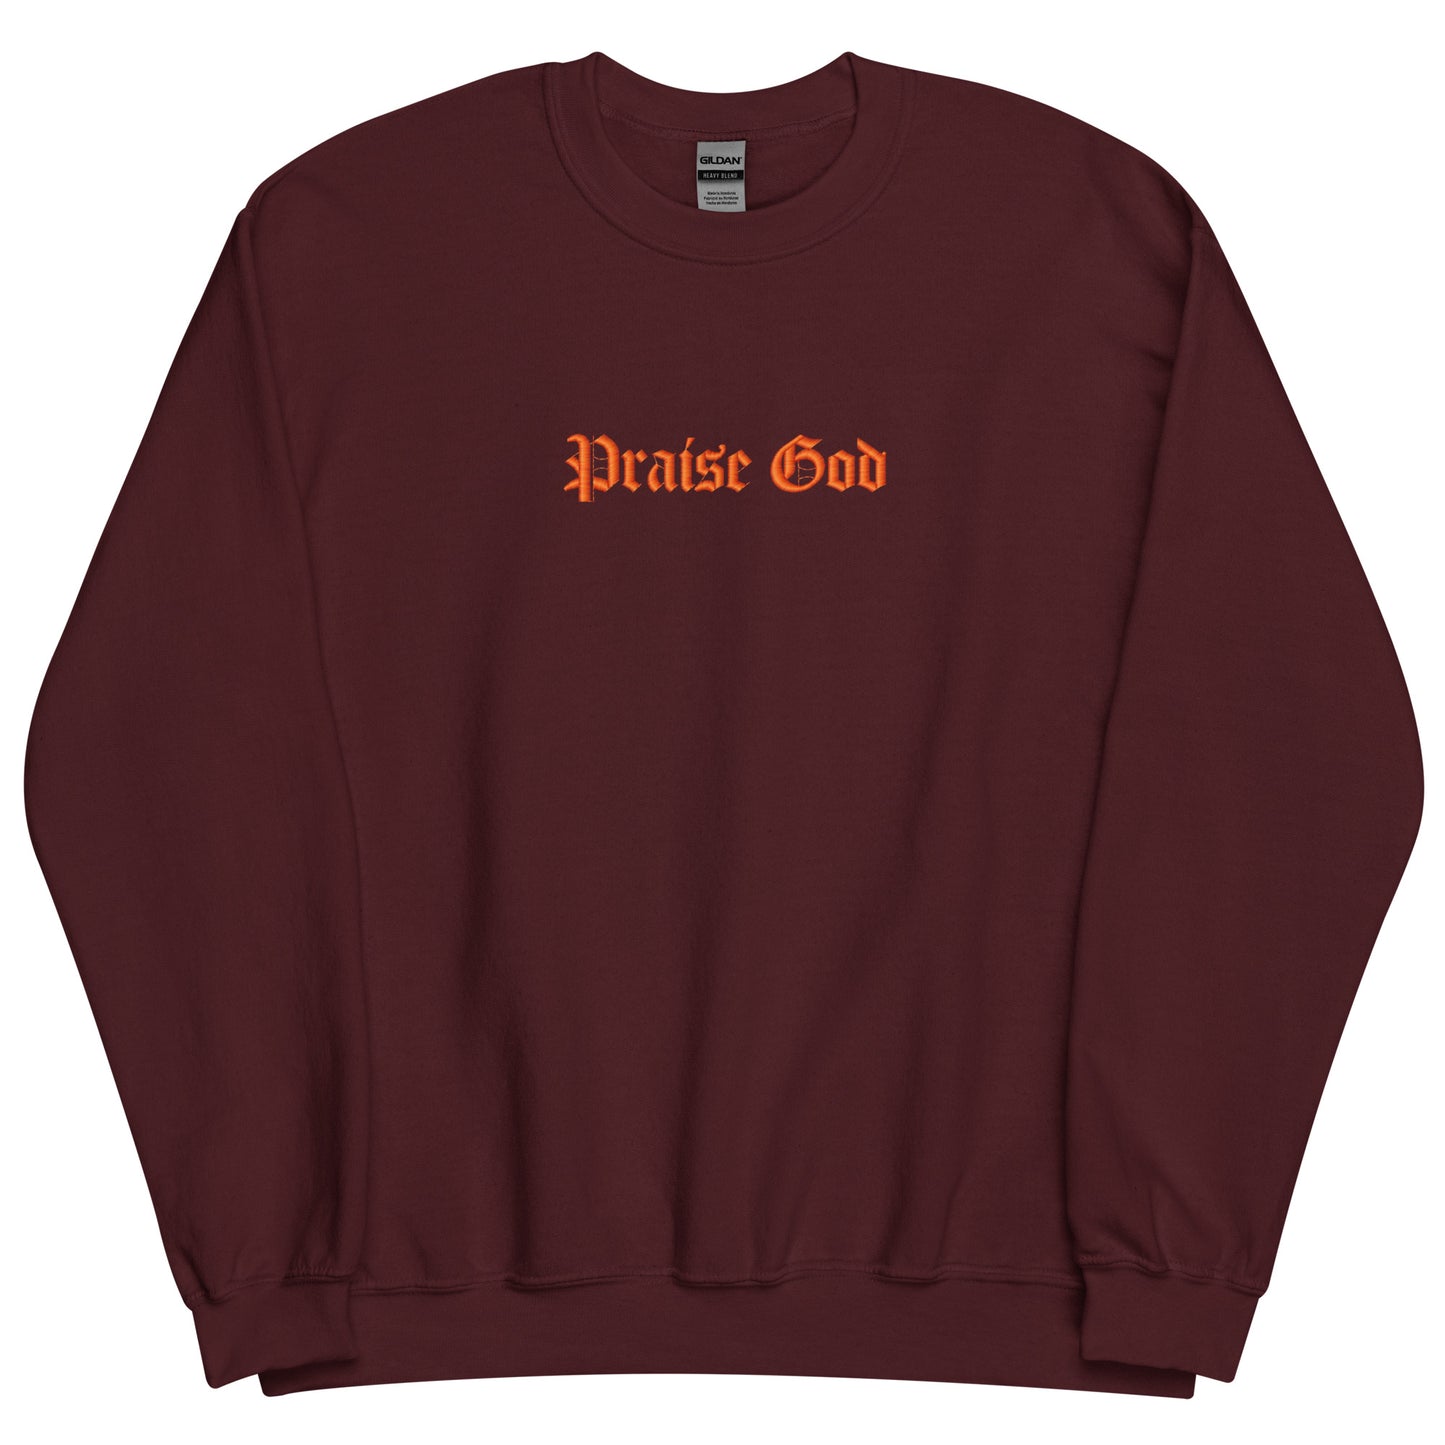 Praise God embroidery Sweatshirt